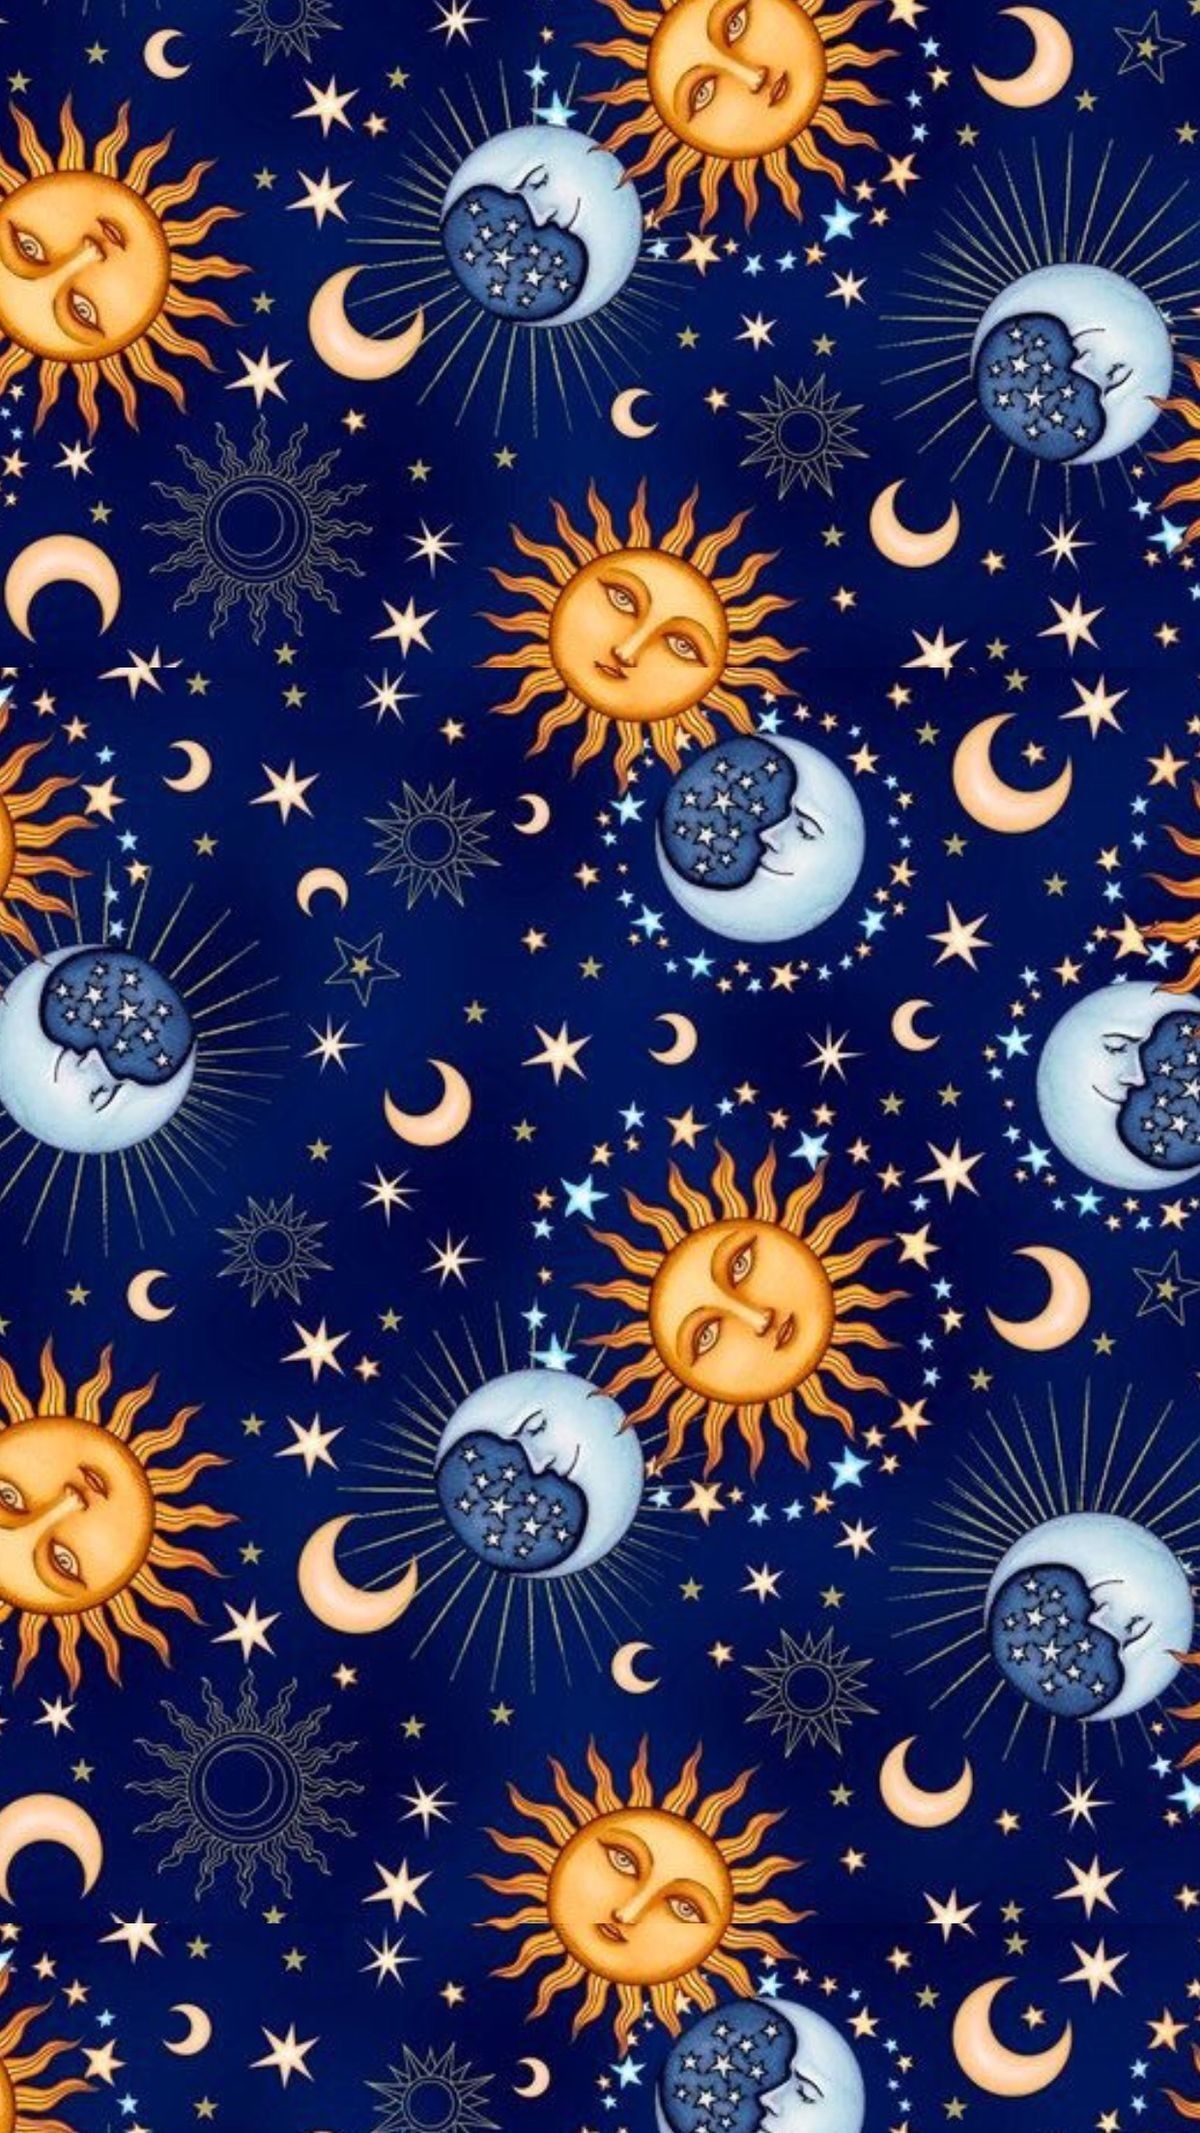 Sun and Moon iPhone Wallpaper .wallpaperaccess.com